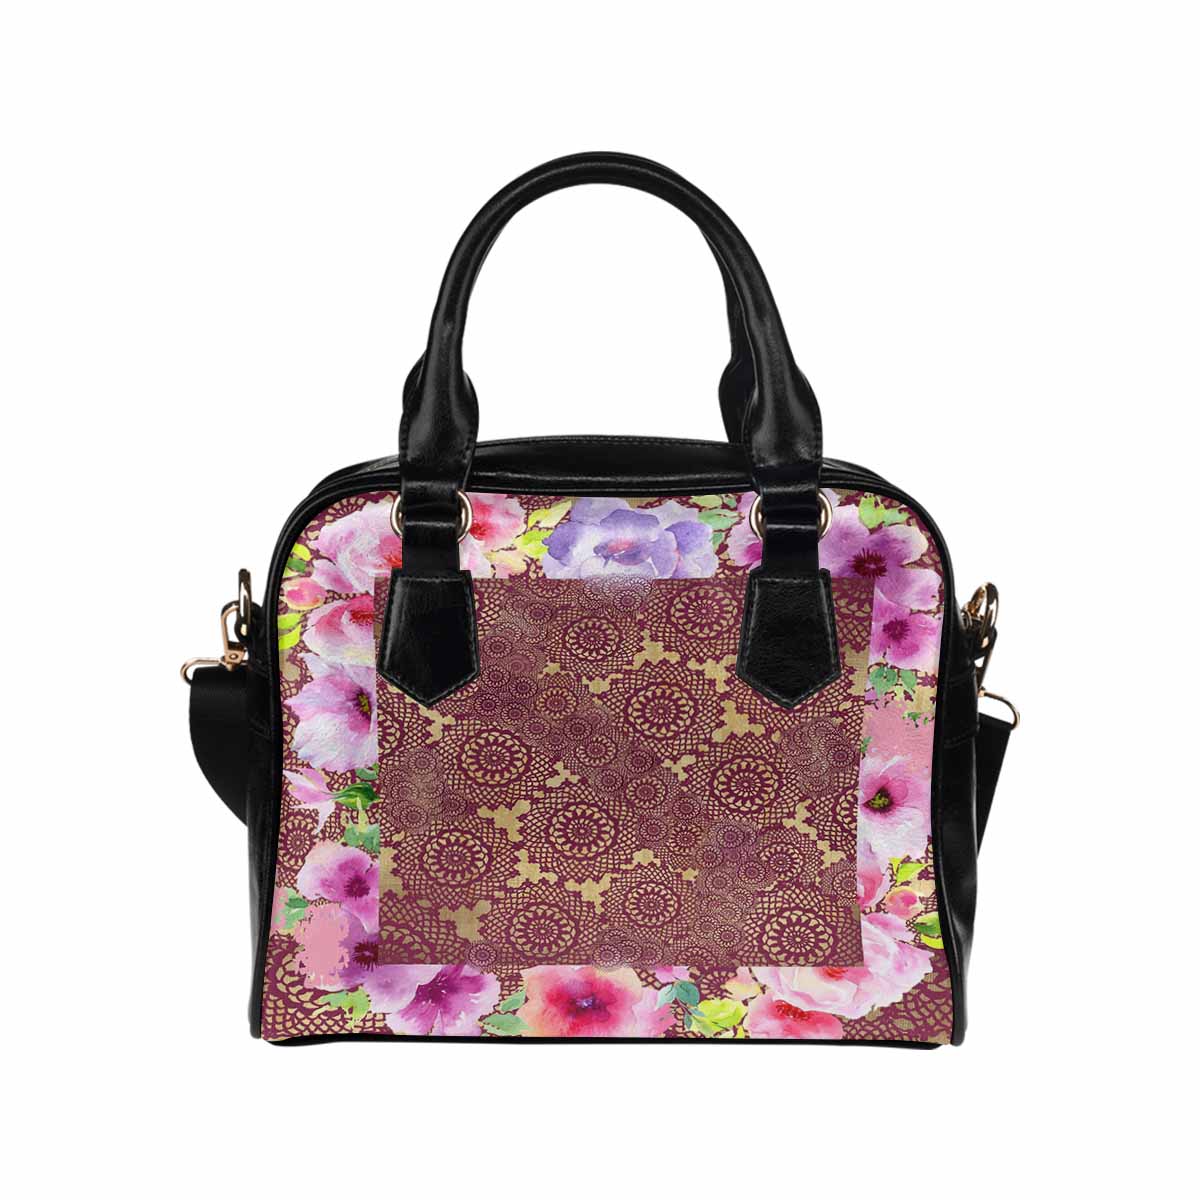 Victorian lace print, cute handbag, Mod 19163453, design 13